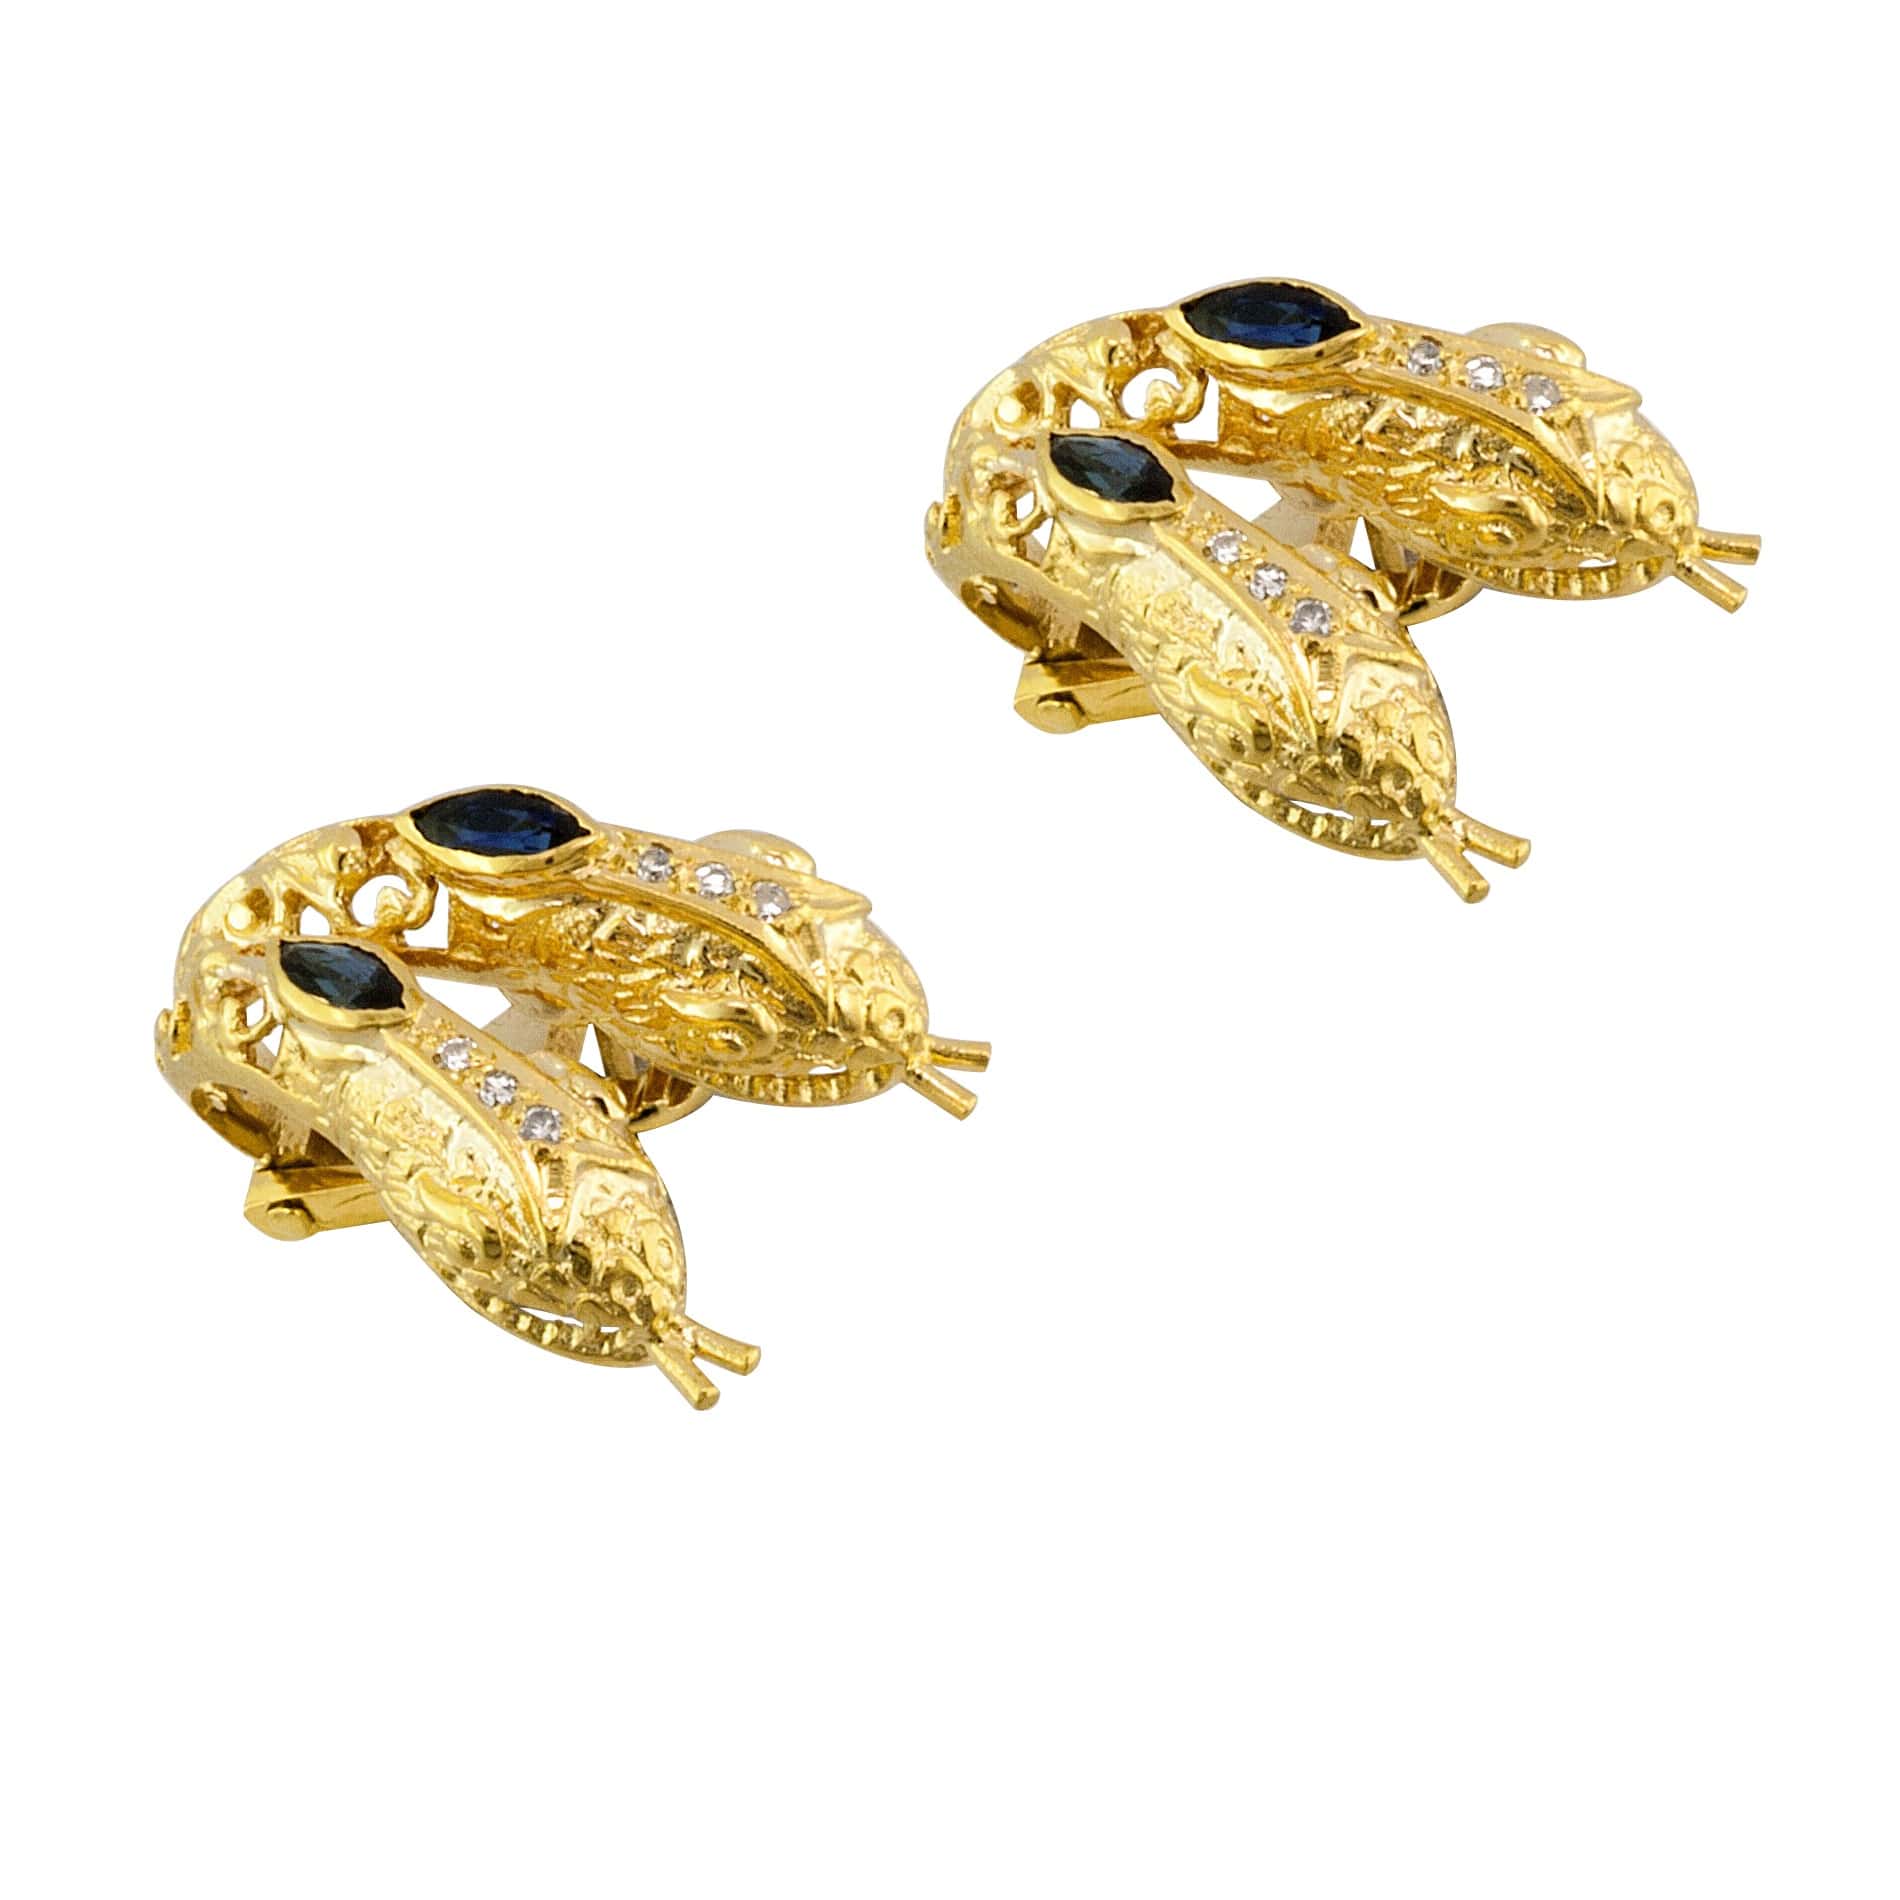 18k jewellery gold jewelry precious stones animal κοσμήματα κοσμηματα κόσμημα κοσμημα χρυσα πολίτιμοι πολιτιμοι λιθοι λίθοι snake φύδι